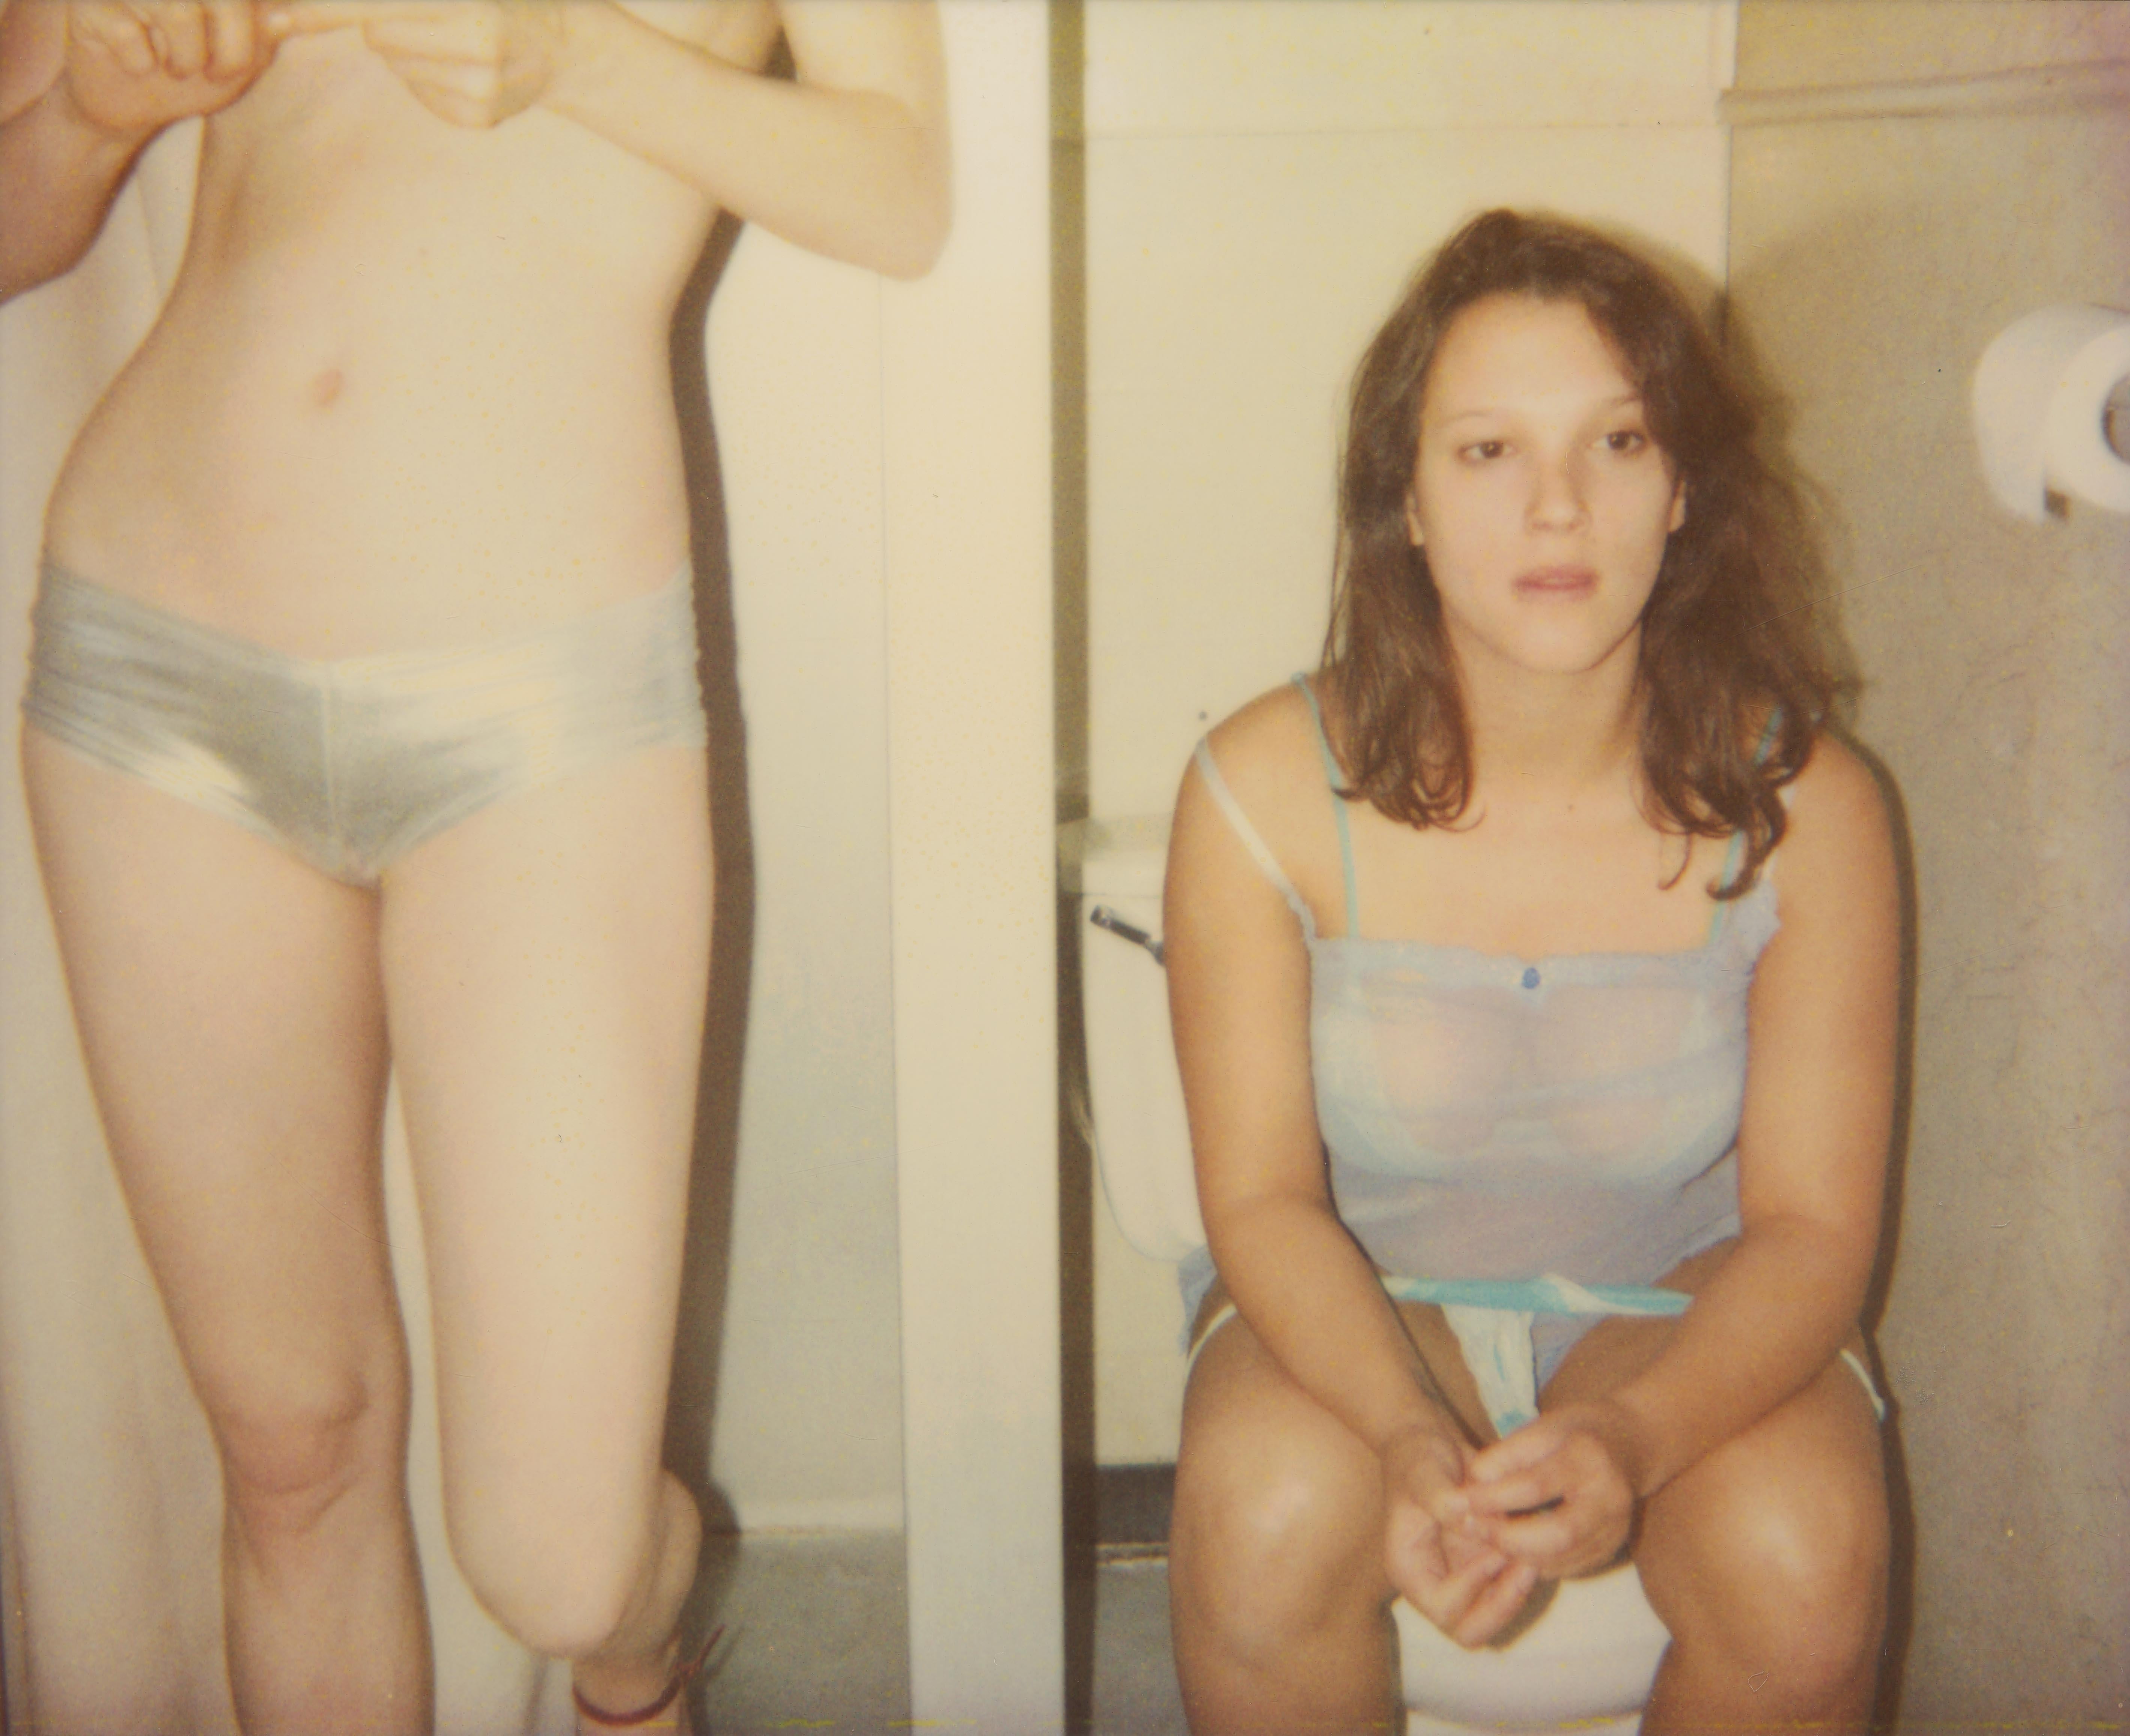 Stefanie Schneider Color Photograph - 'Taking Turns' - 21st Century, Polaroid, Nude Photography, Color